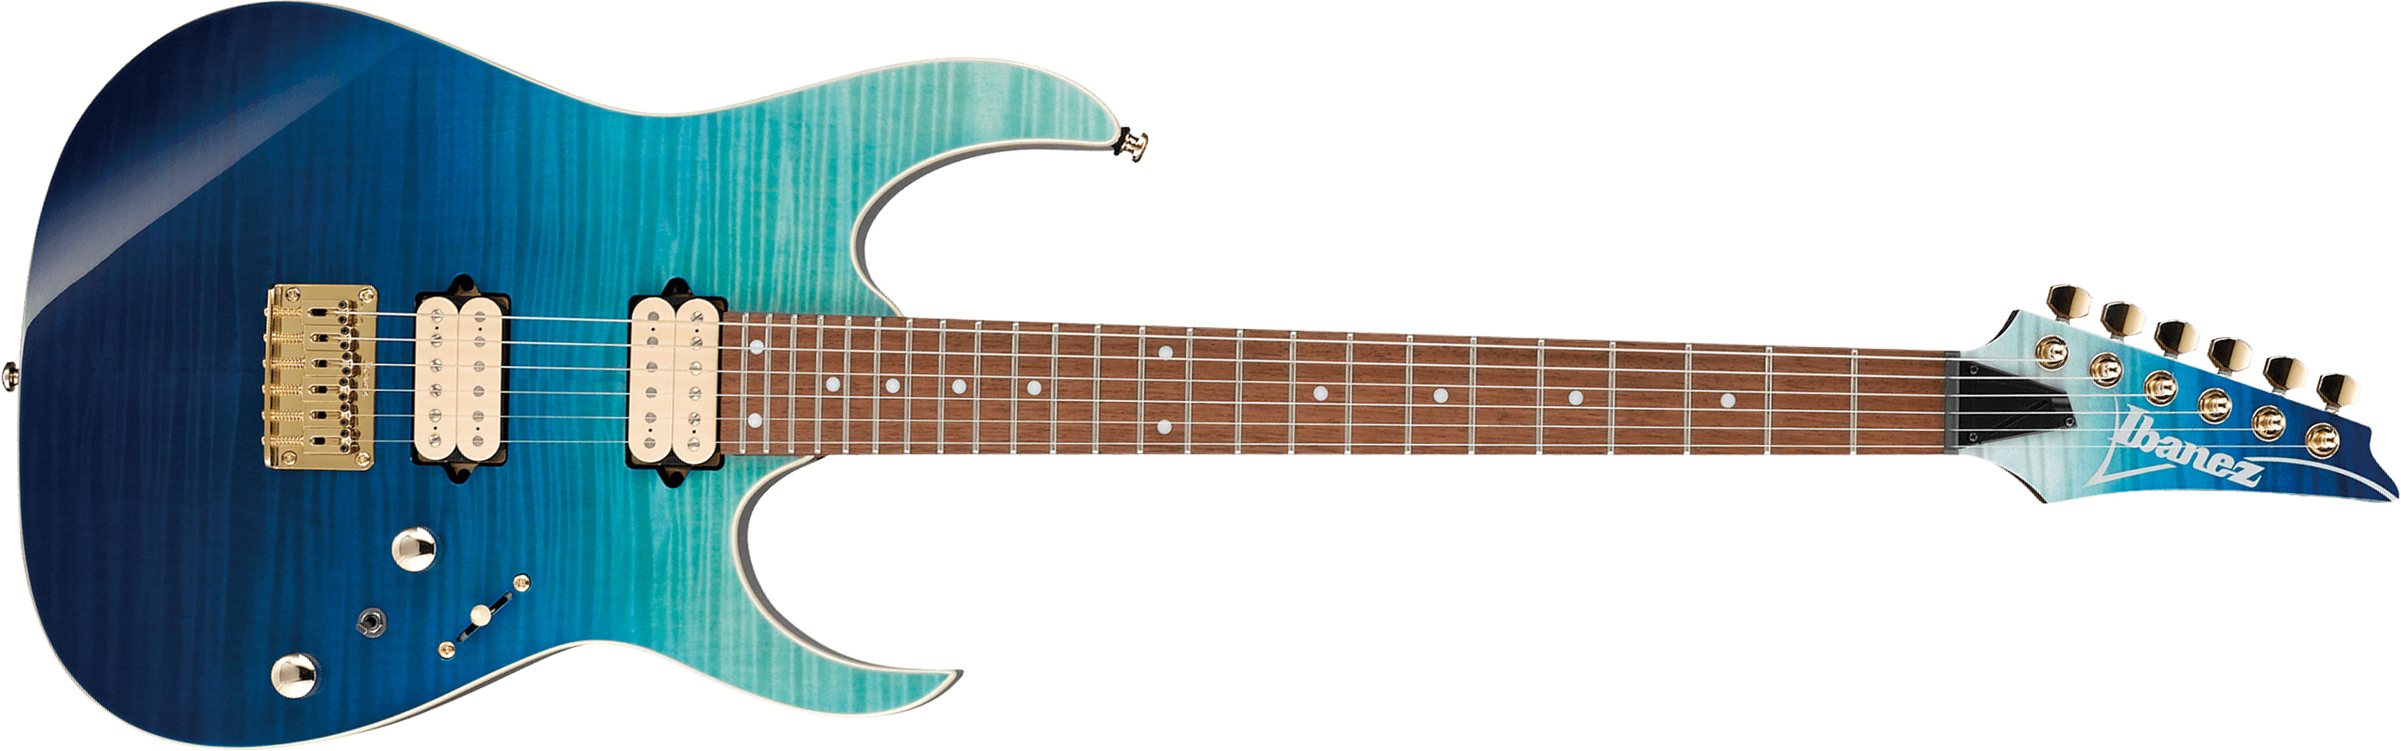 Ibanez Rg421hpfm Brg Standard Hh Ht Ja - Blue Reef Gradation - Guitarra eléctrica con forma de str. - Main picture